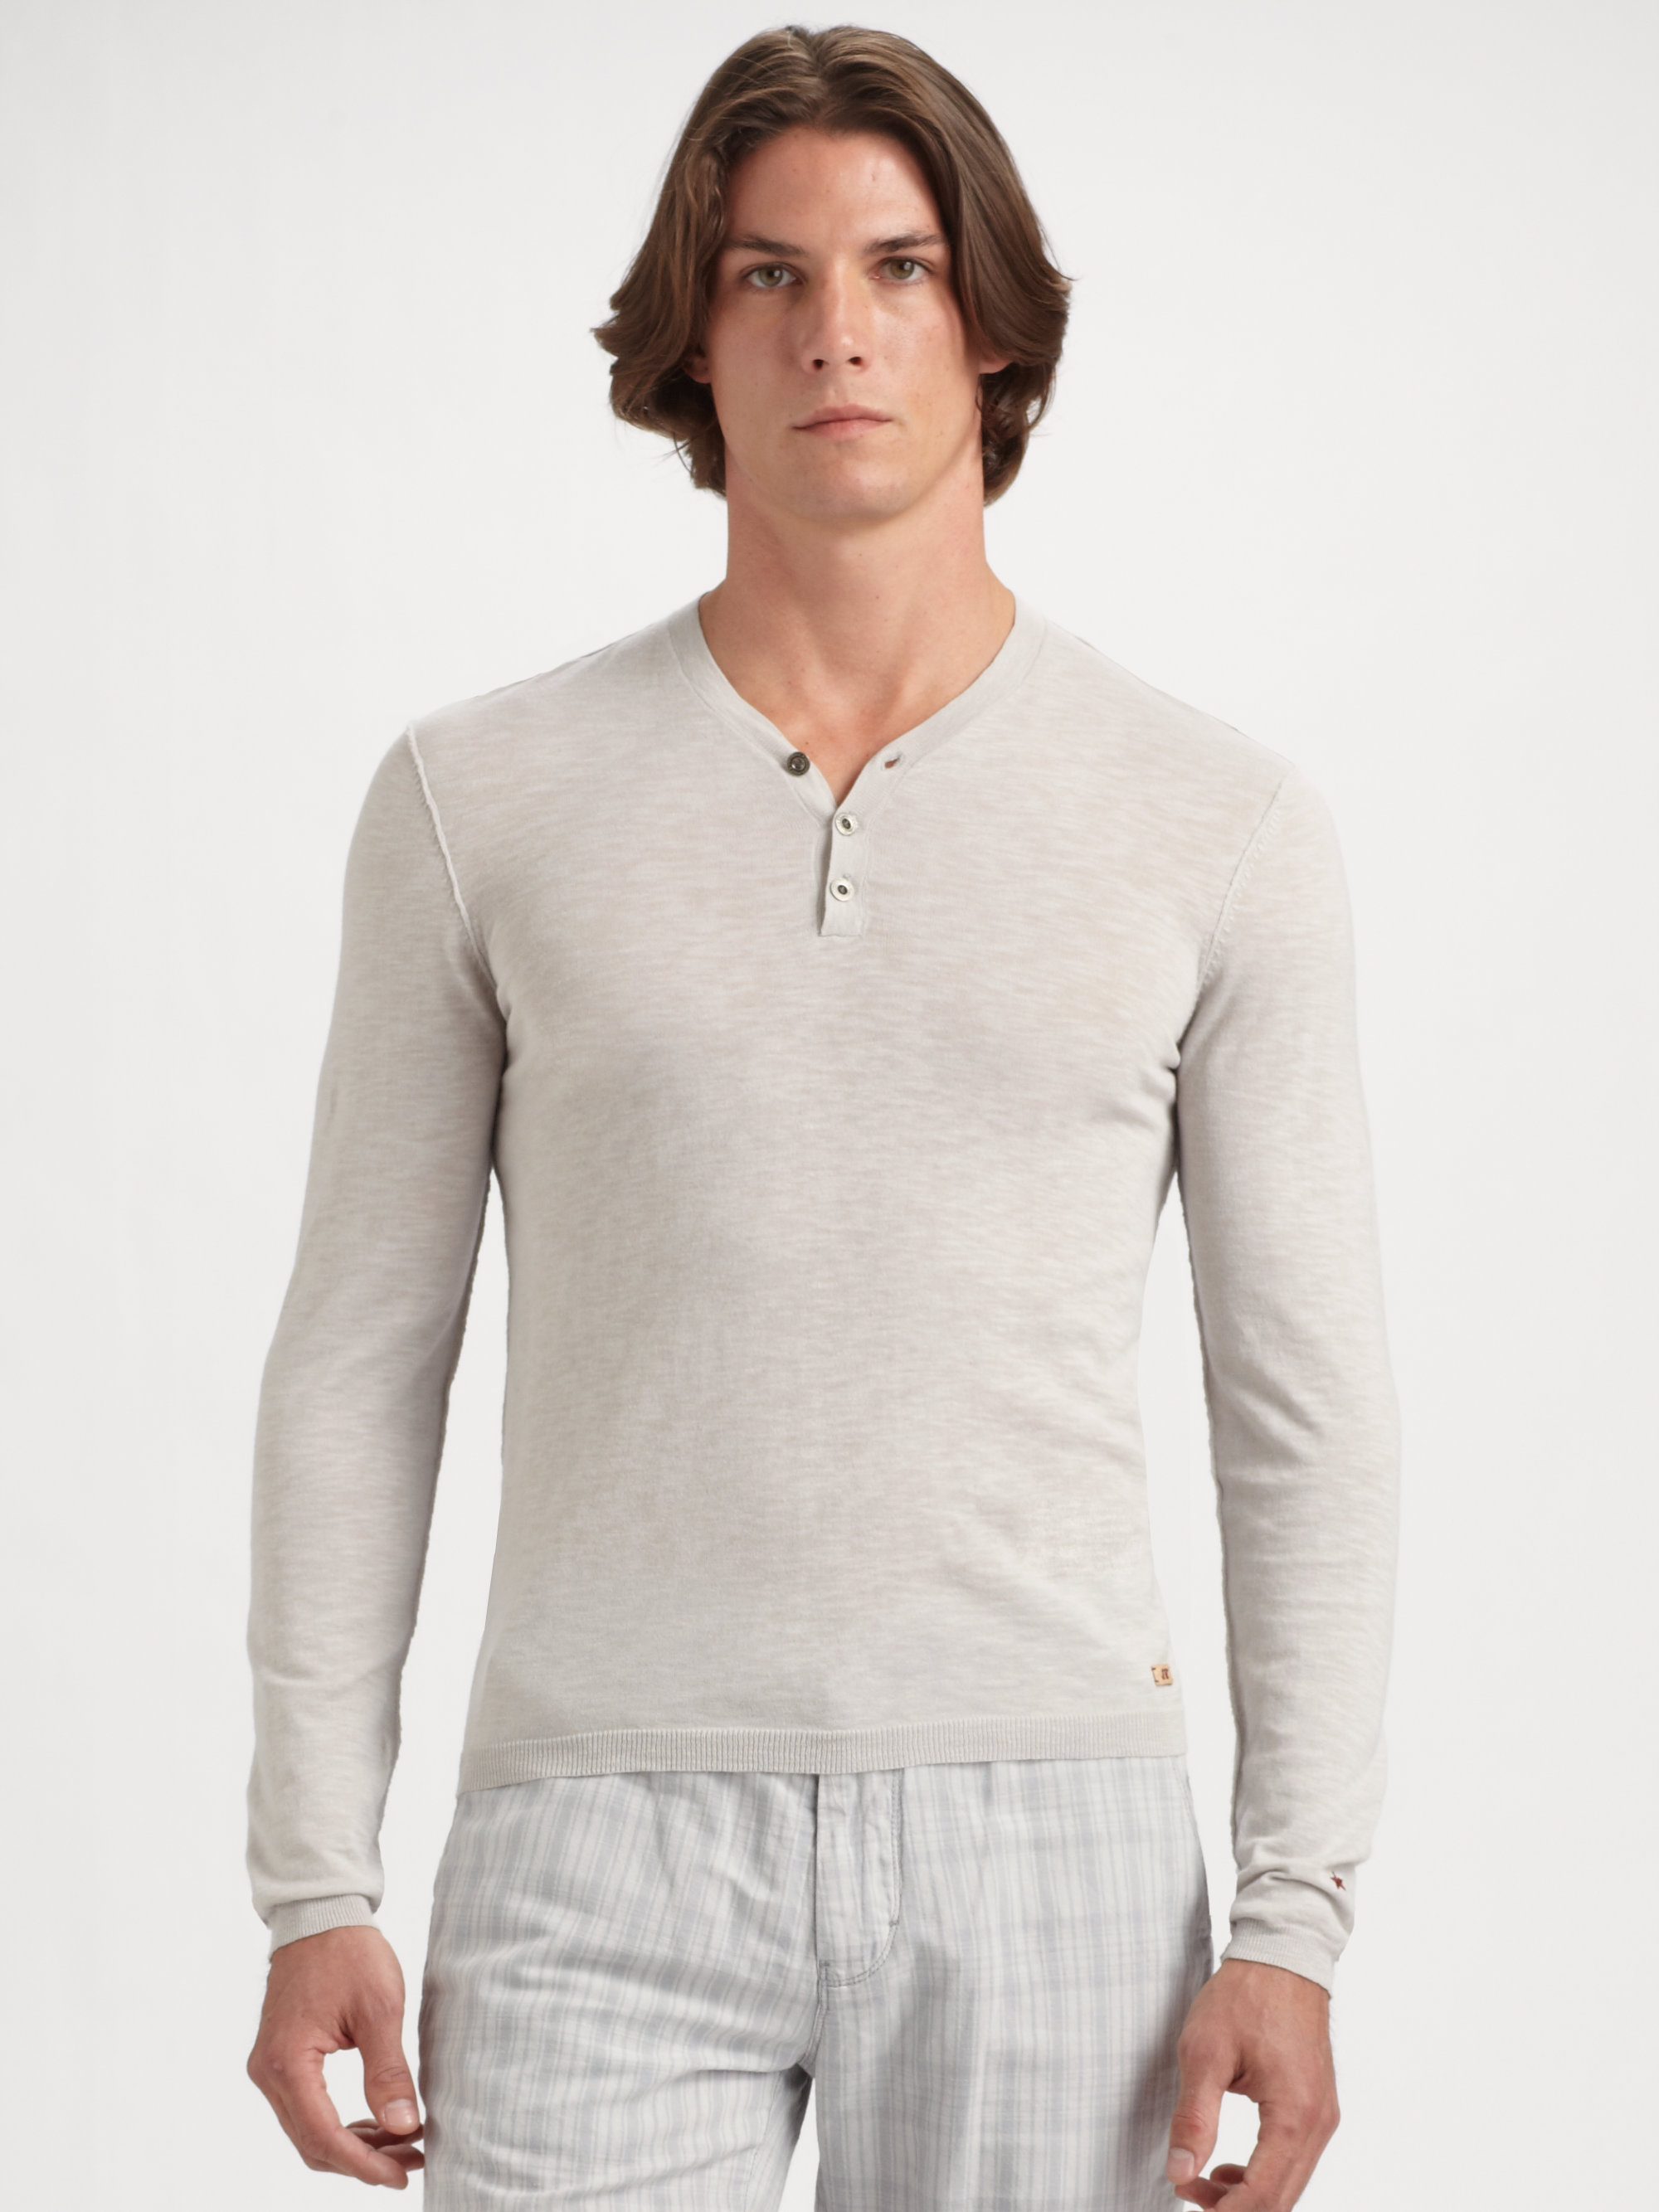 Lyst - Converse Slubbed Linen Henley Sweater in Gray for Men